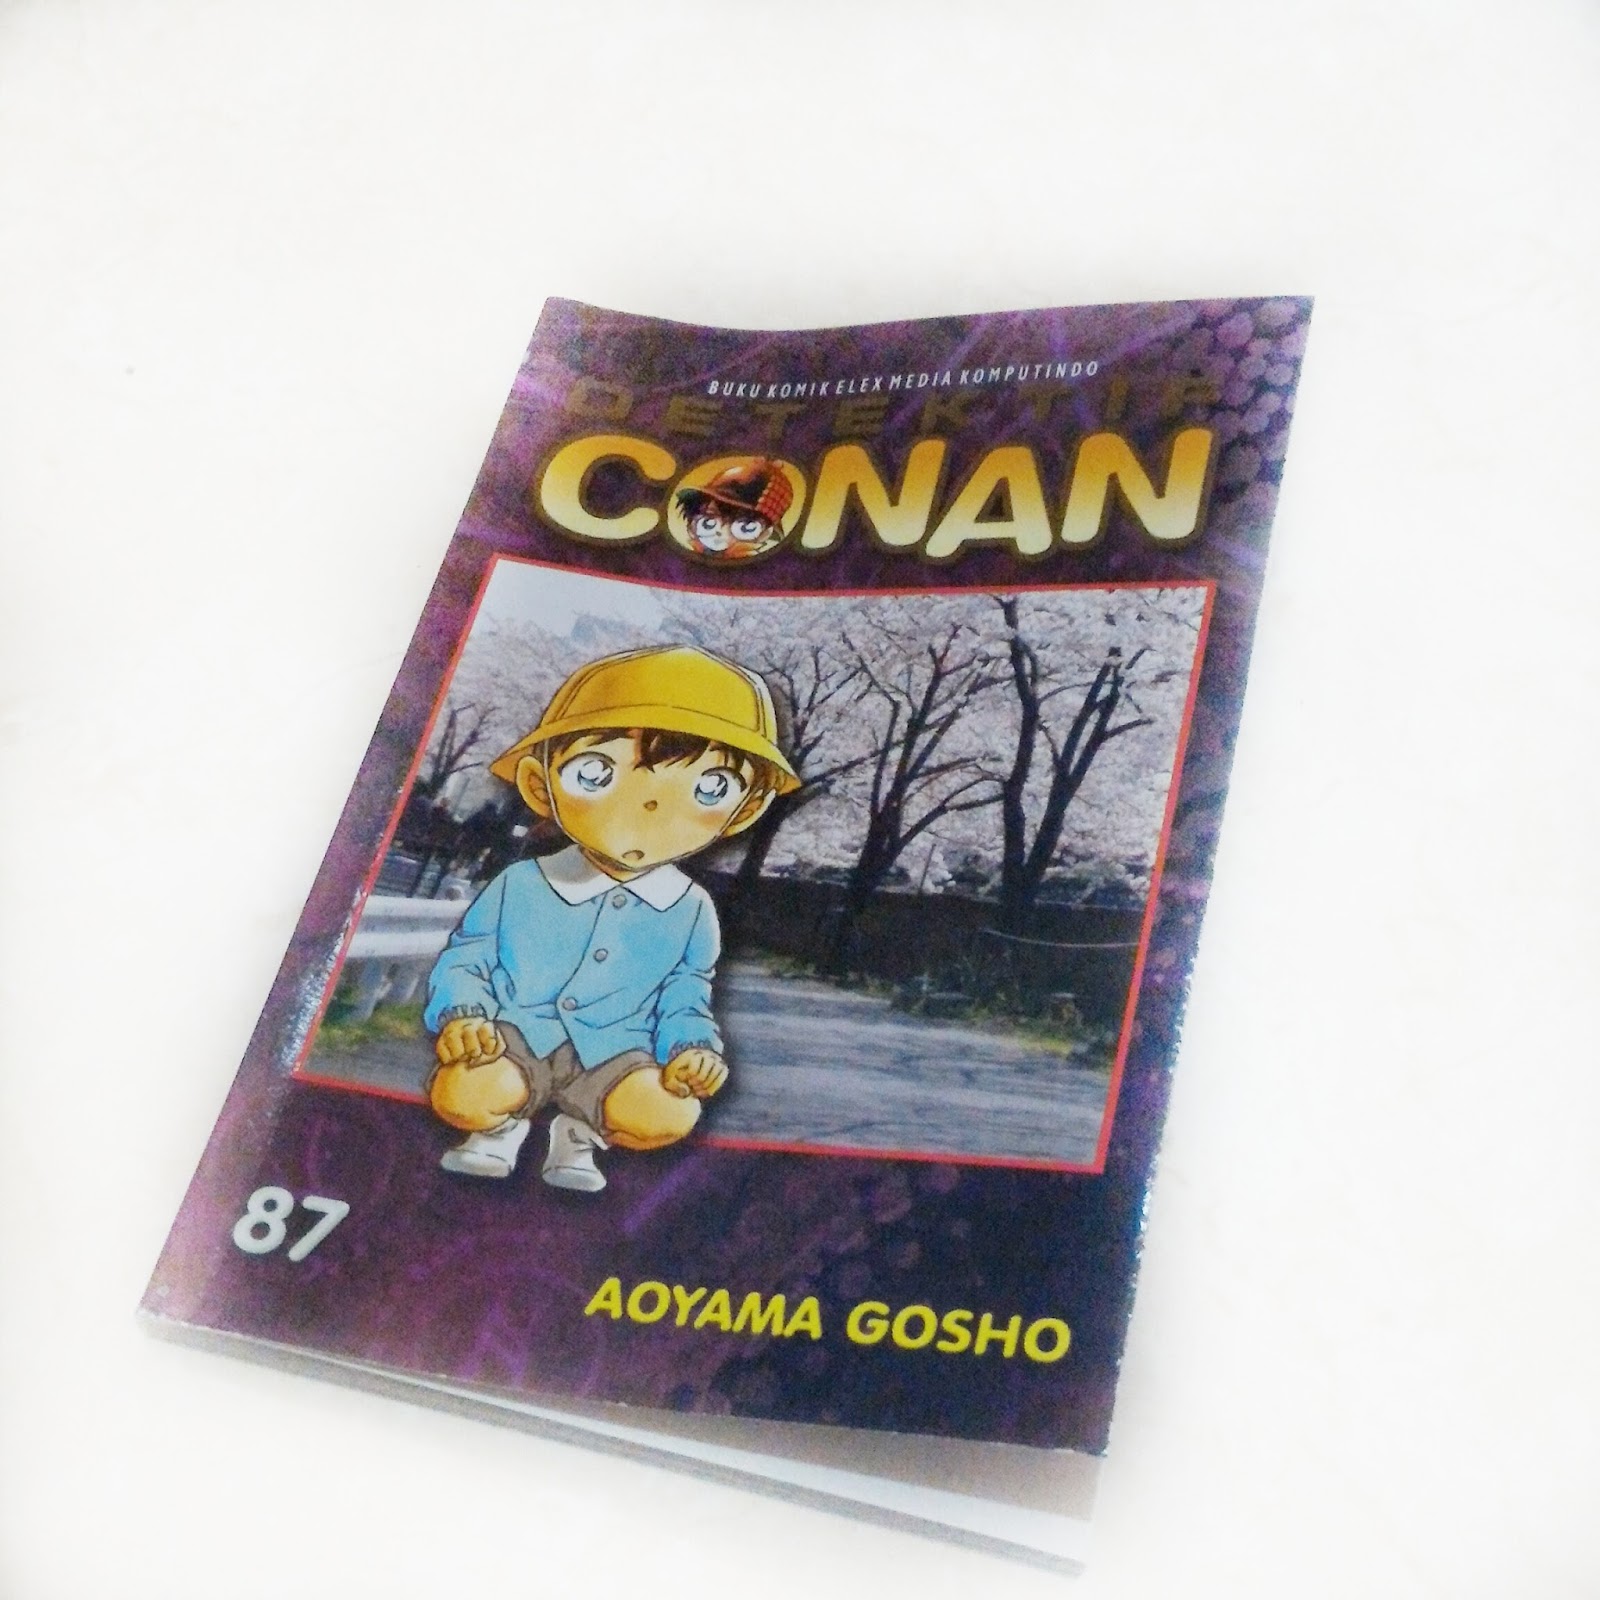 [Resensi Buku] Detektif Conan Vol 87 Aoyama Gosho